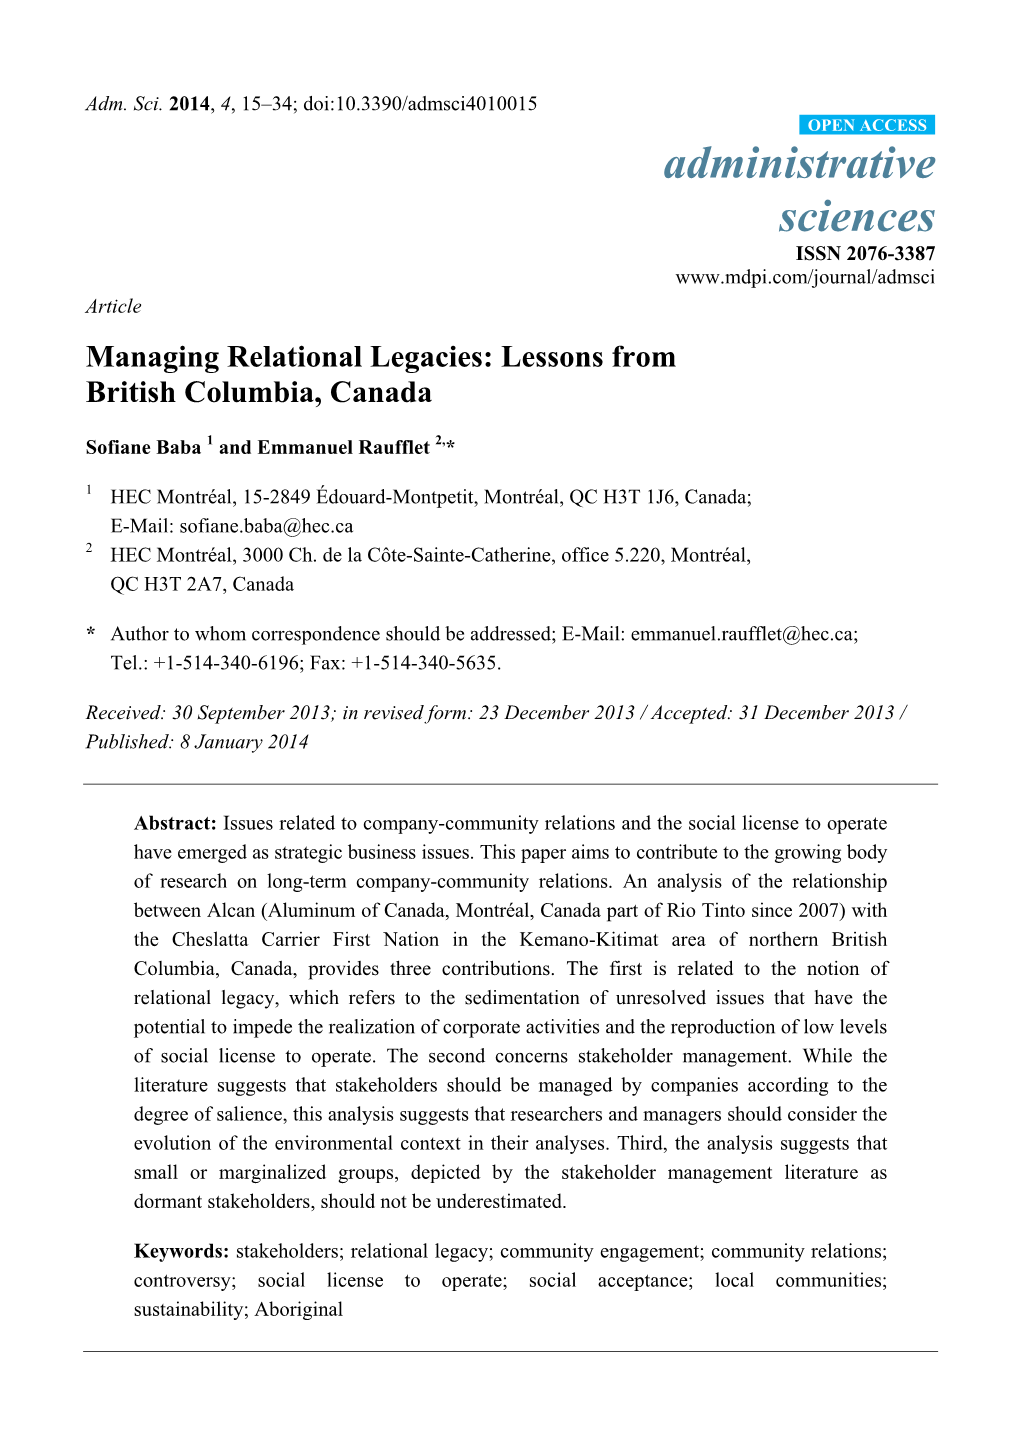 Managing Relational Legacies: Lessons from British Columbia, Canada